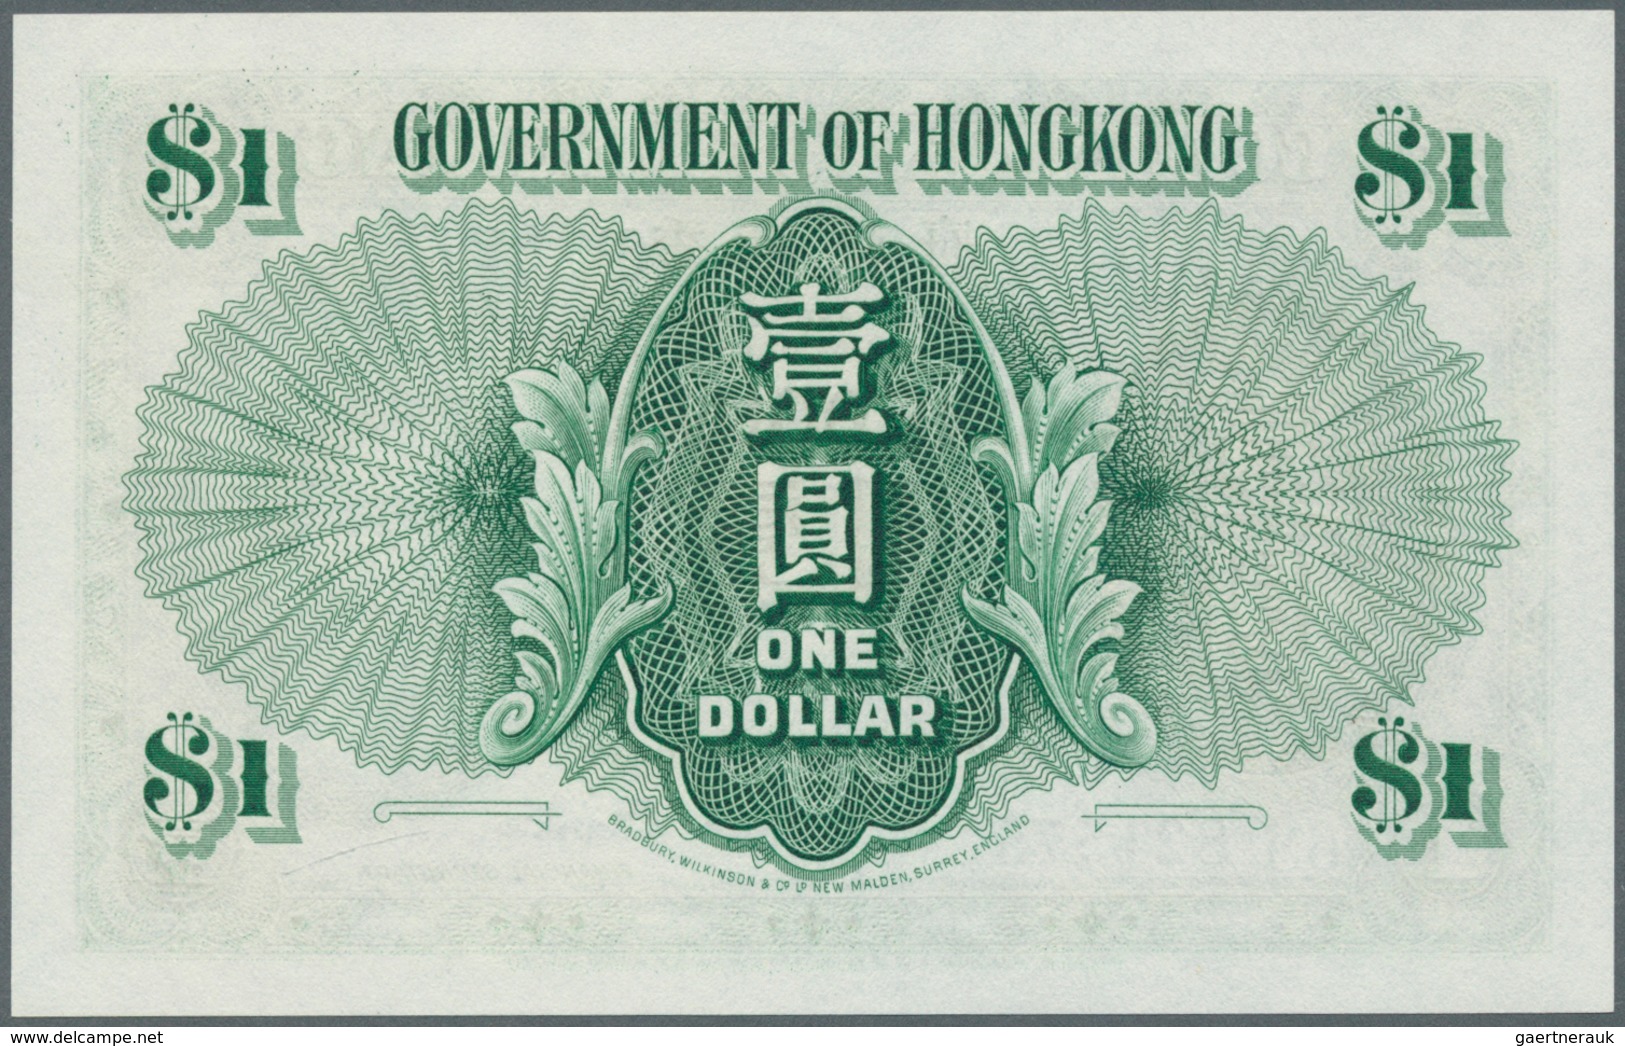 Hong Kong: set of 19 banknotes containing 10 Dollars The Chartered Bank 1977 P. 74c (UNC), 5 Dollars